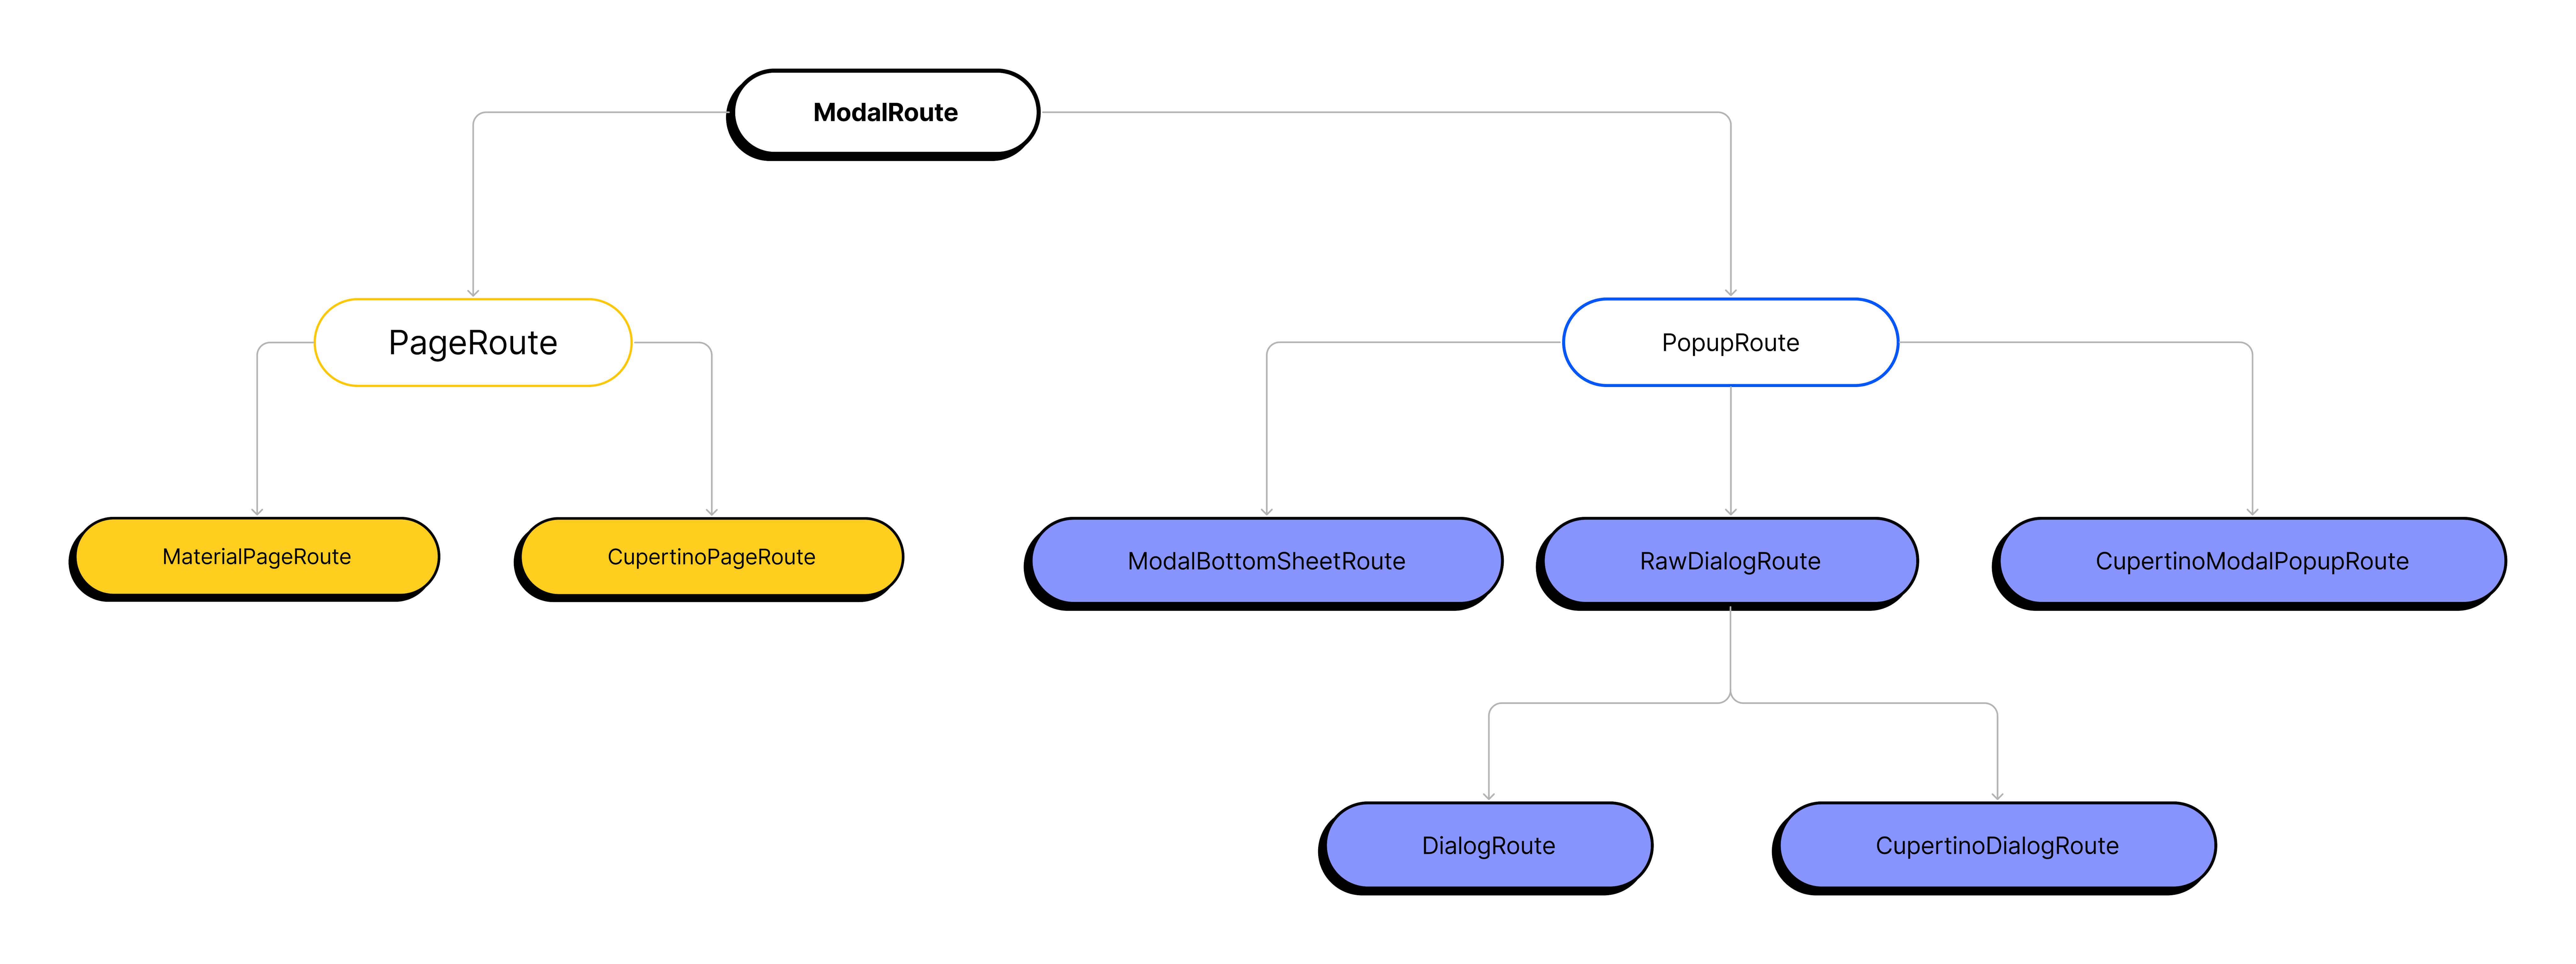 Flutter's ModalRoute class hierarchy